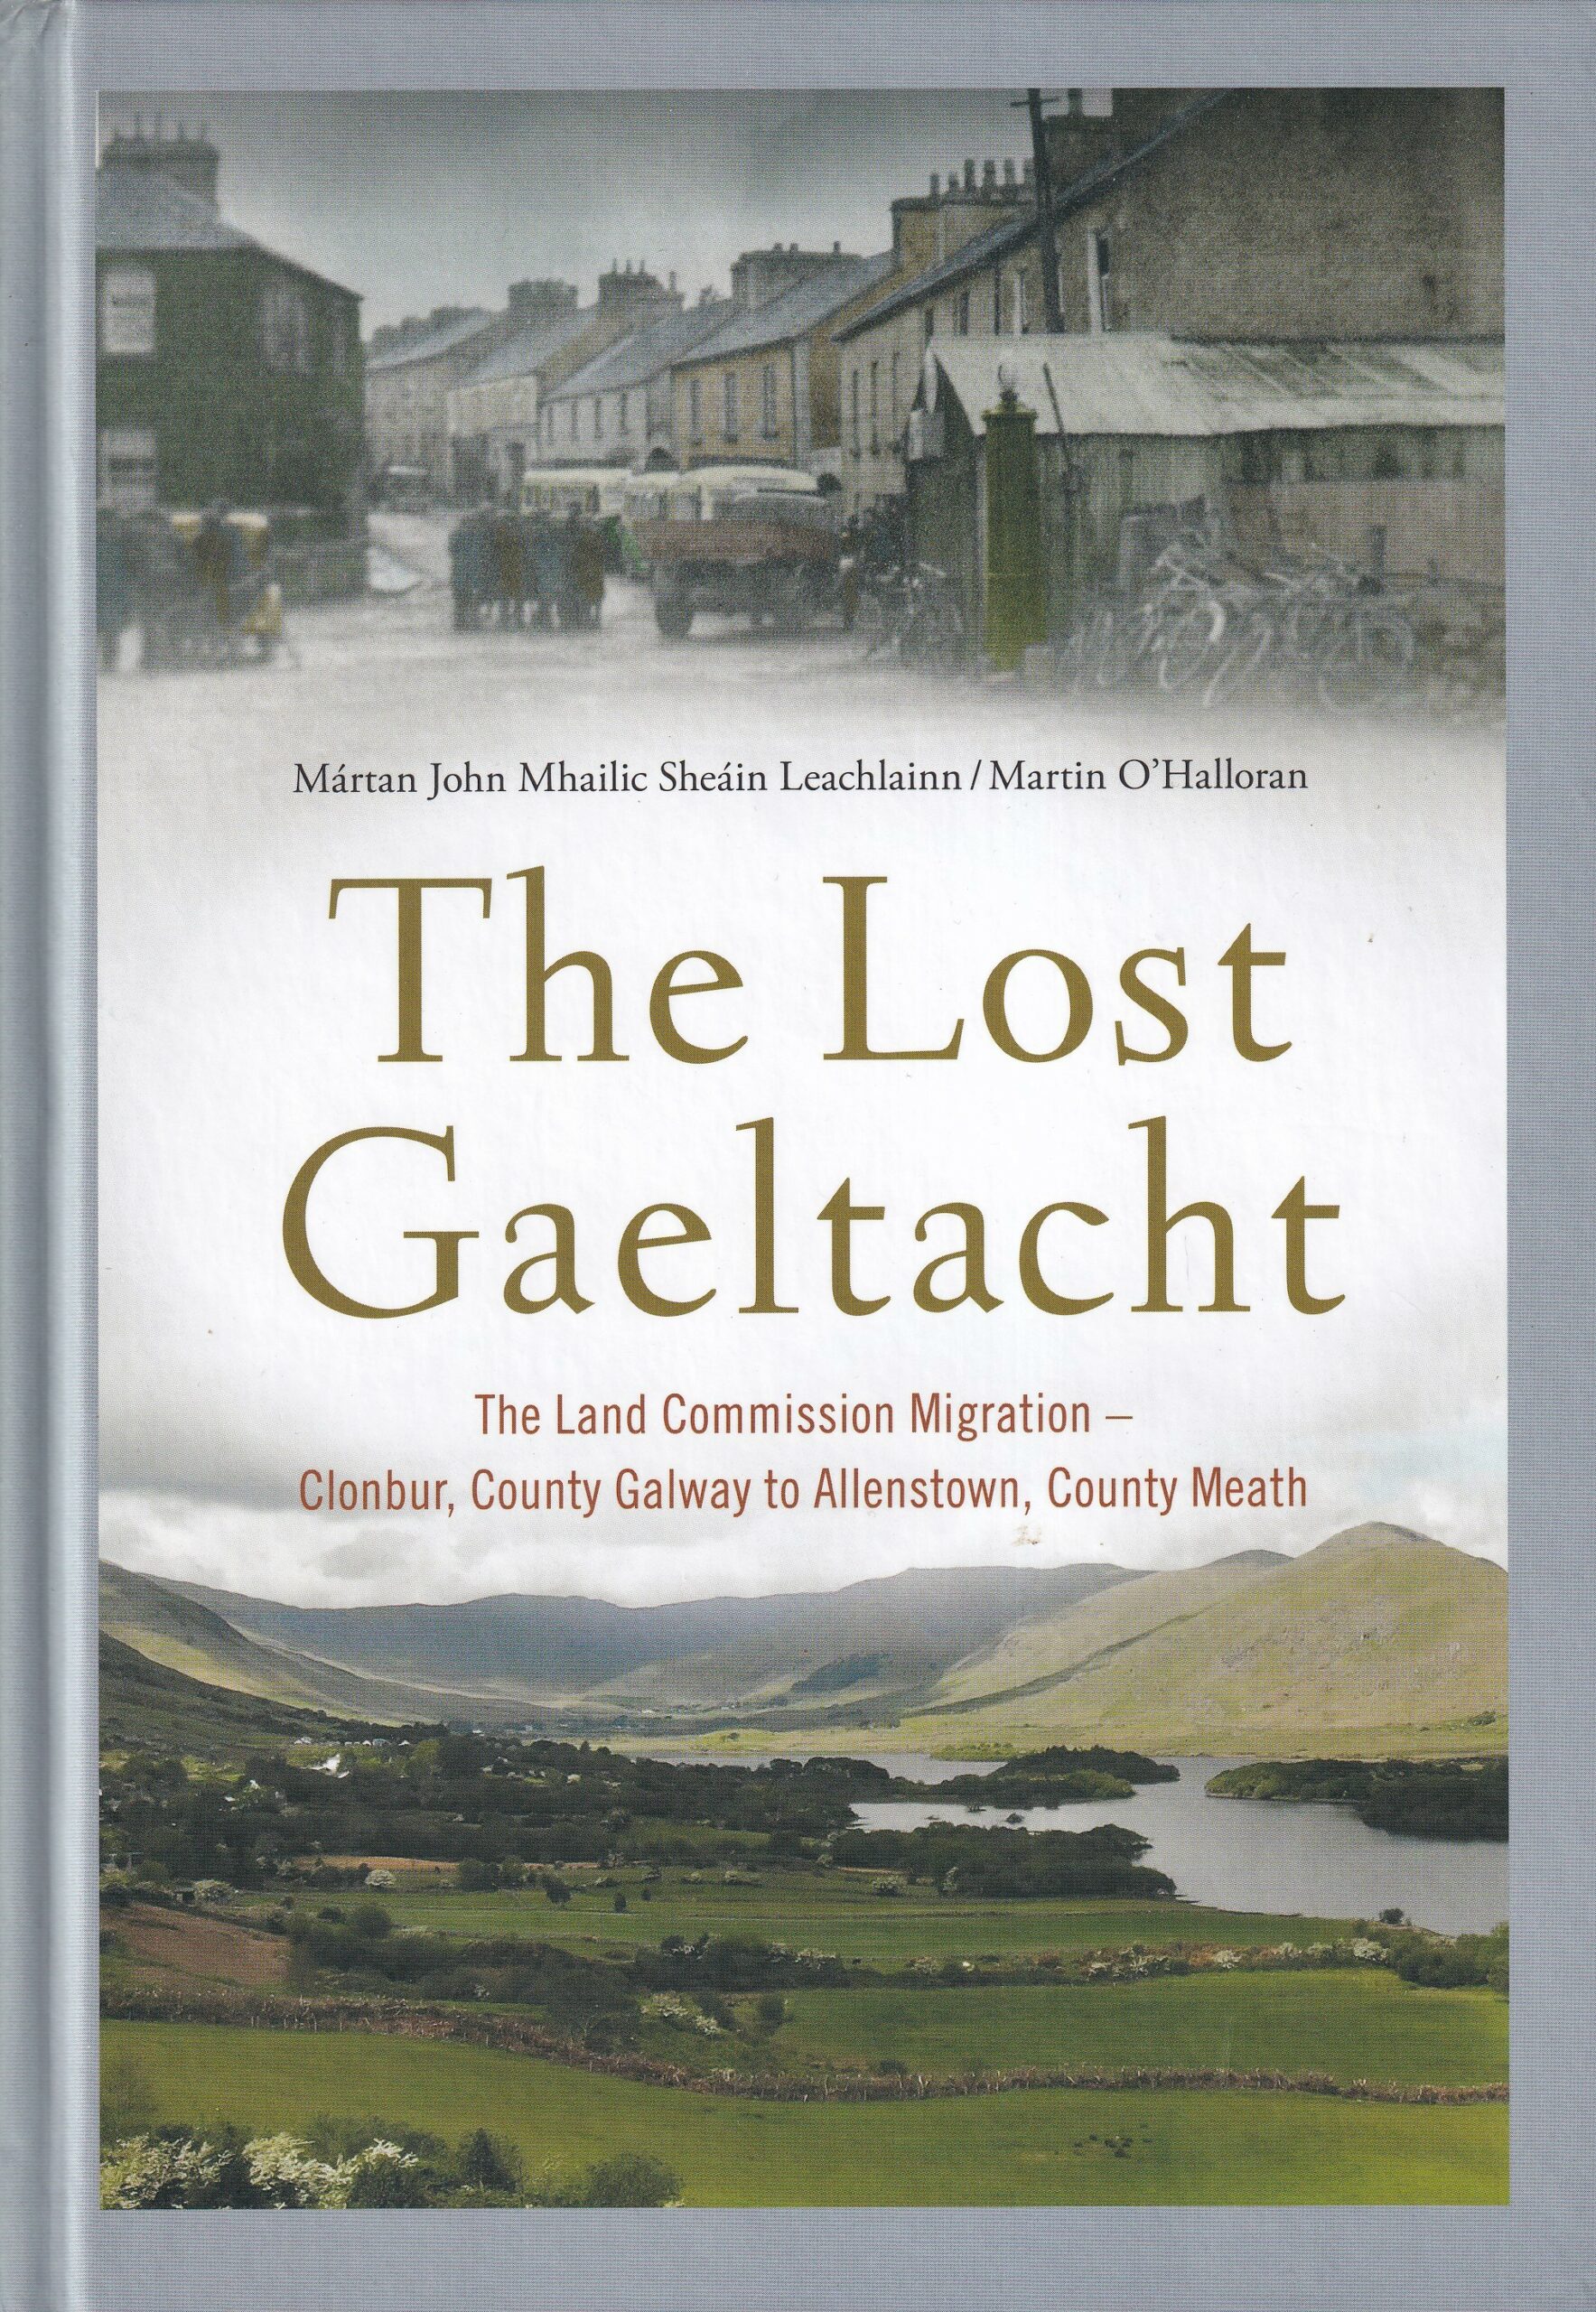 The Lost Gaeltacht: The Land Commission Migration- Clonbur, County Galway to Allenstown, County Meath by Mártan John Mhailic Sheáin Leachlainn/ Martin O'Halloran